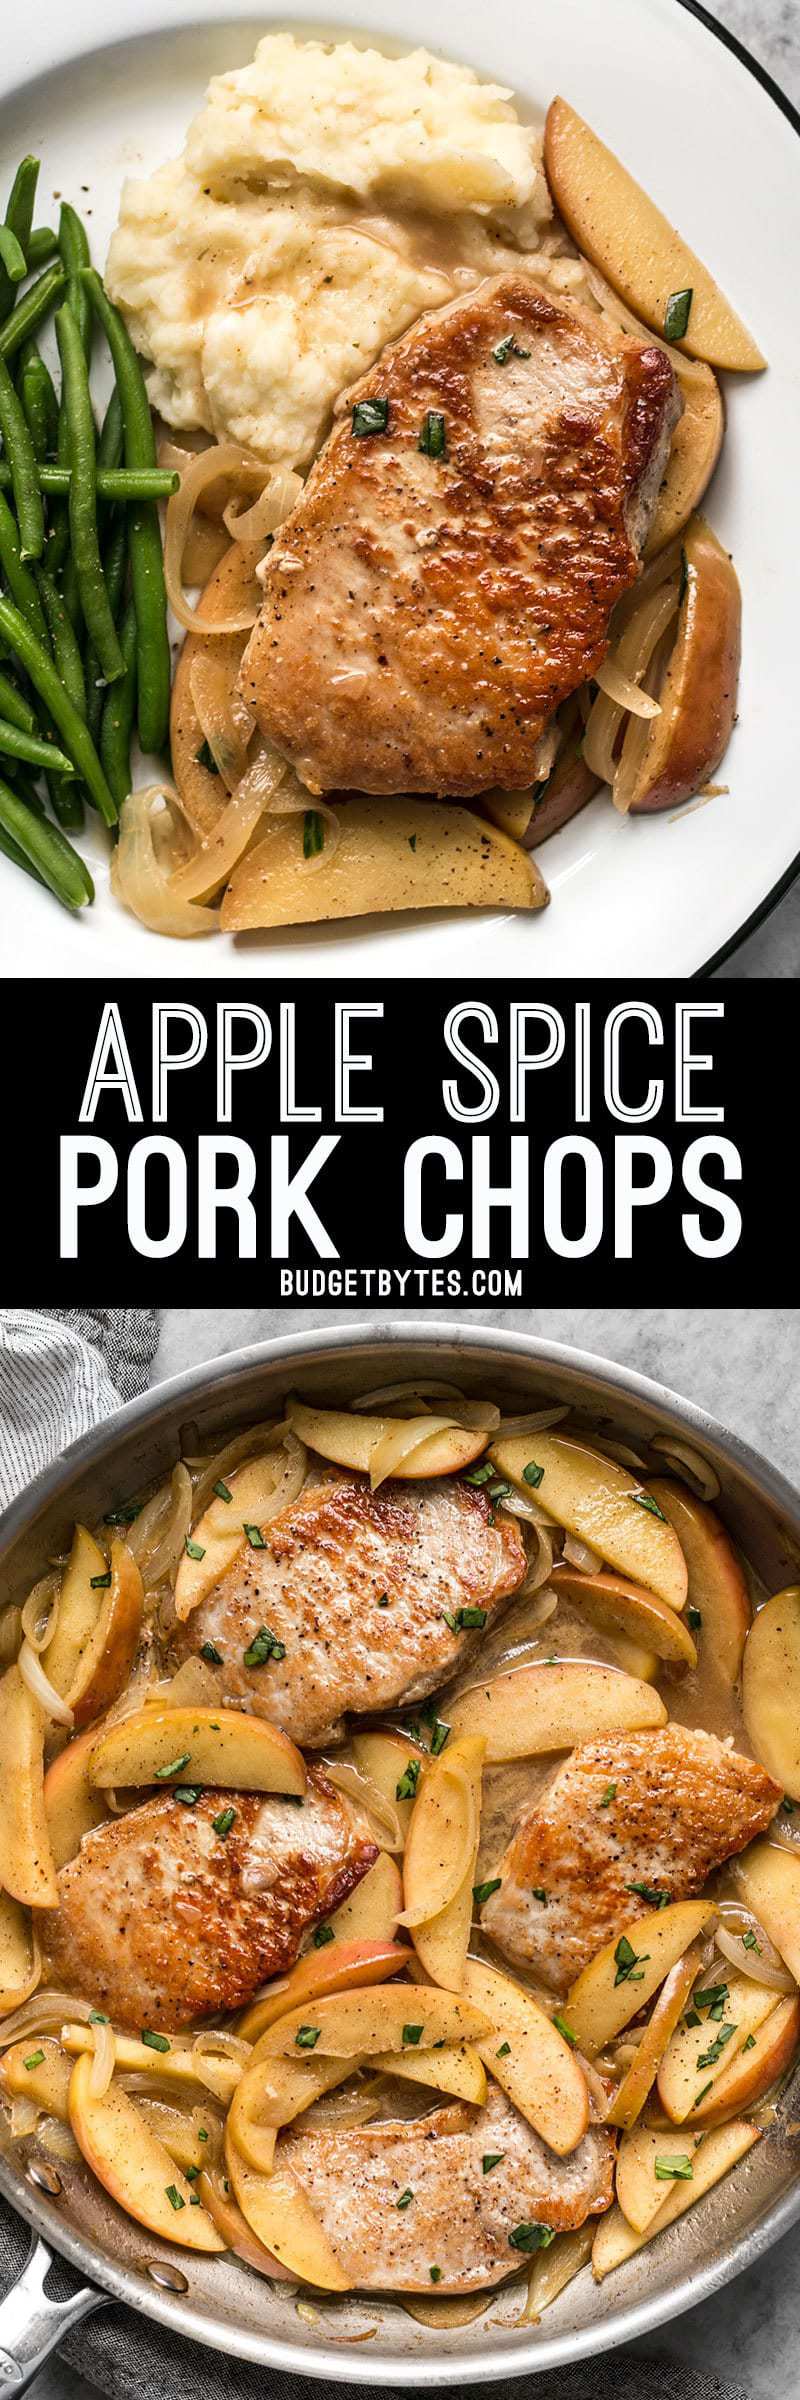 Apple Spice Pork Chop Meal Prep - Budget Bytes